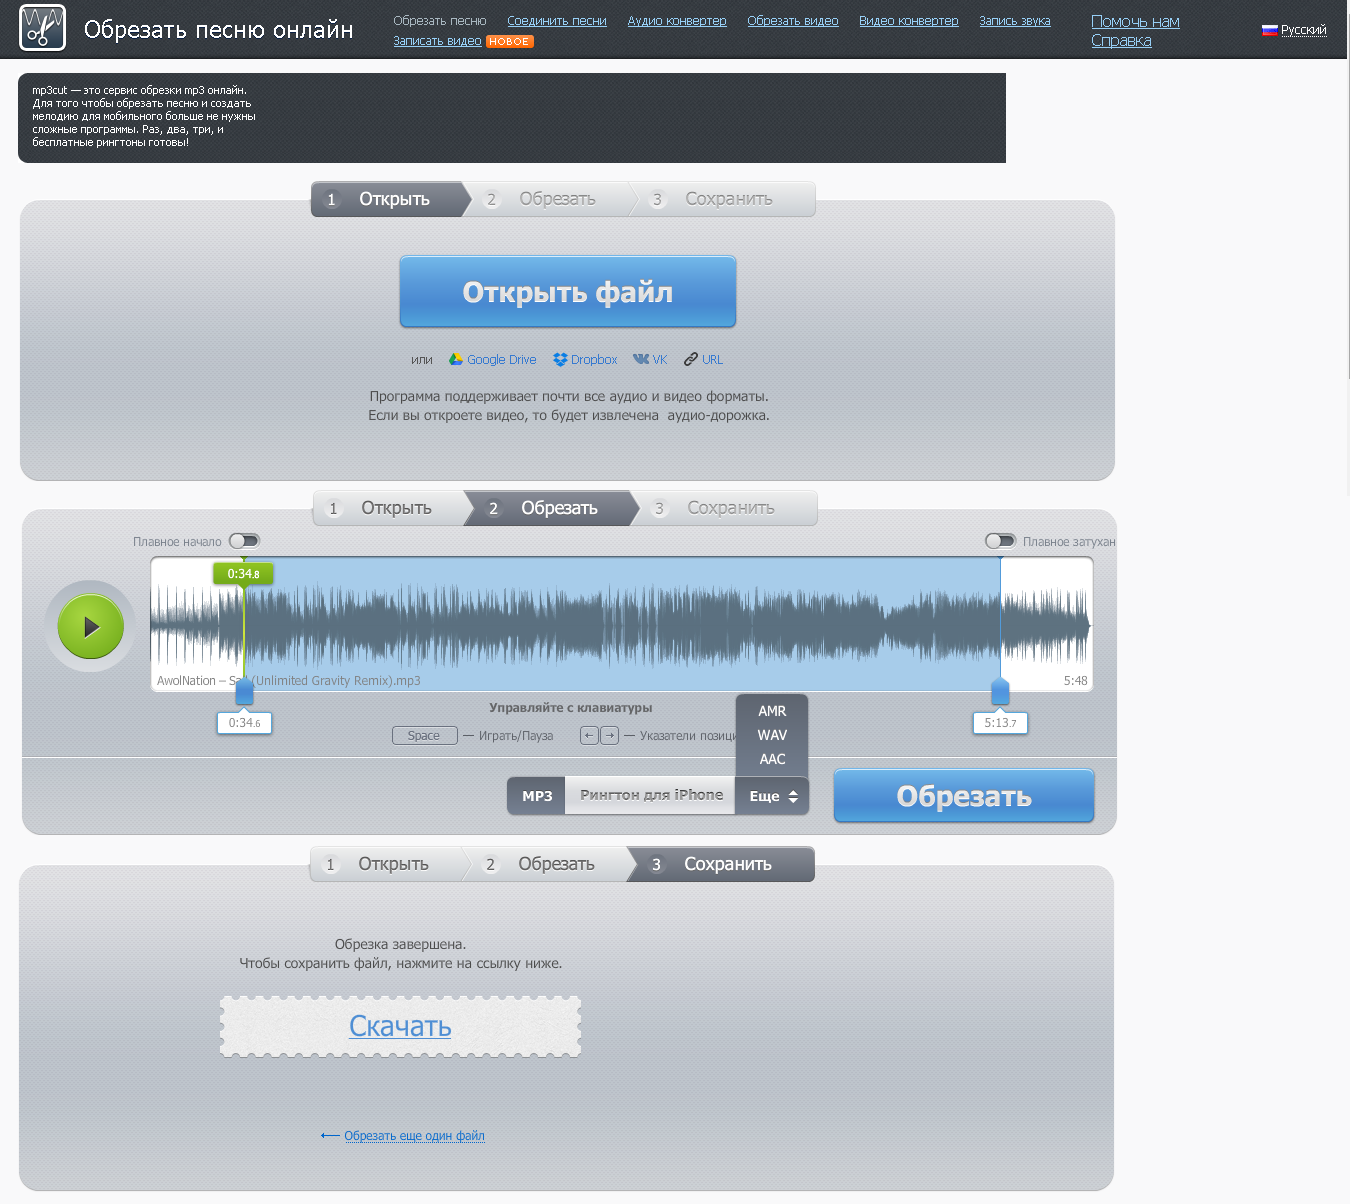 Аудио редактор: конвертируем и обрезаем треки